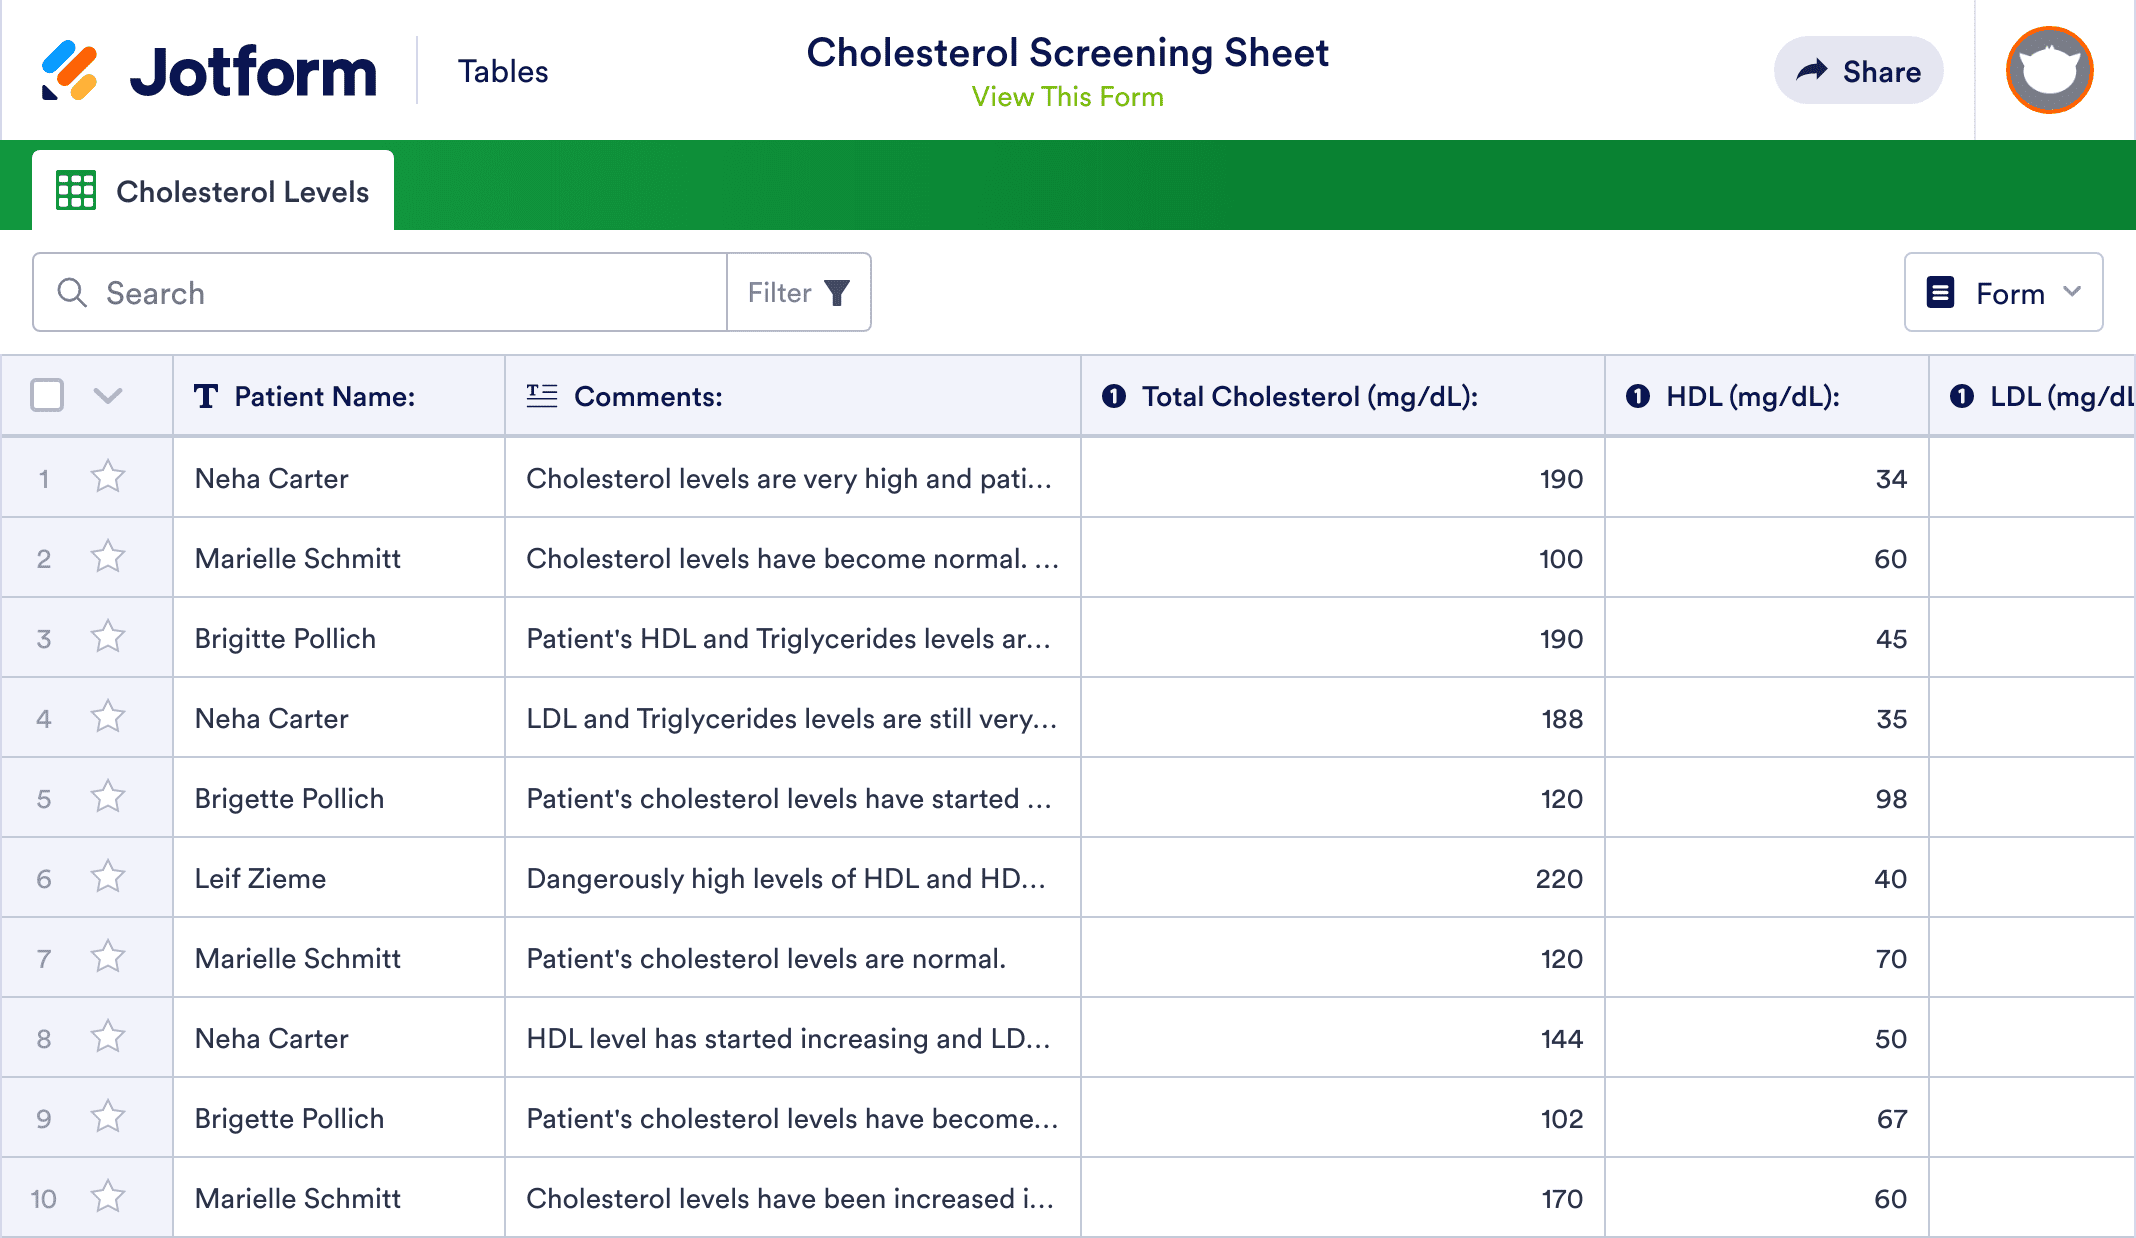 Cholesterol Screening Sheet